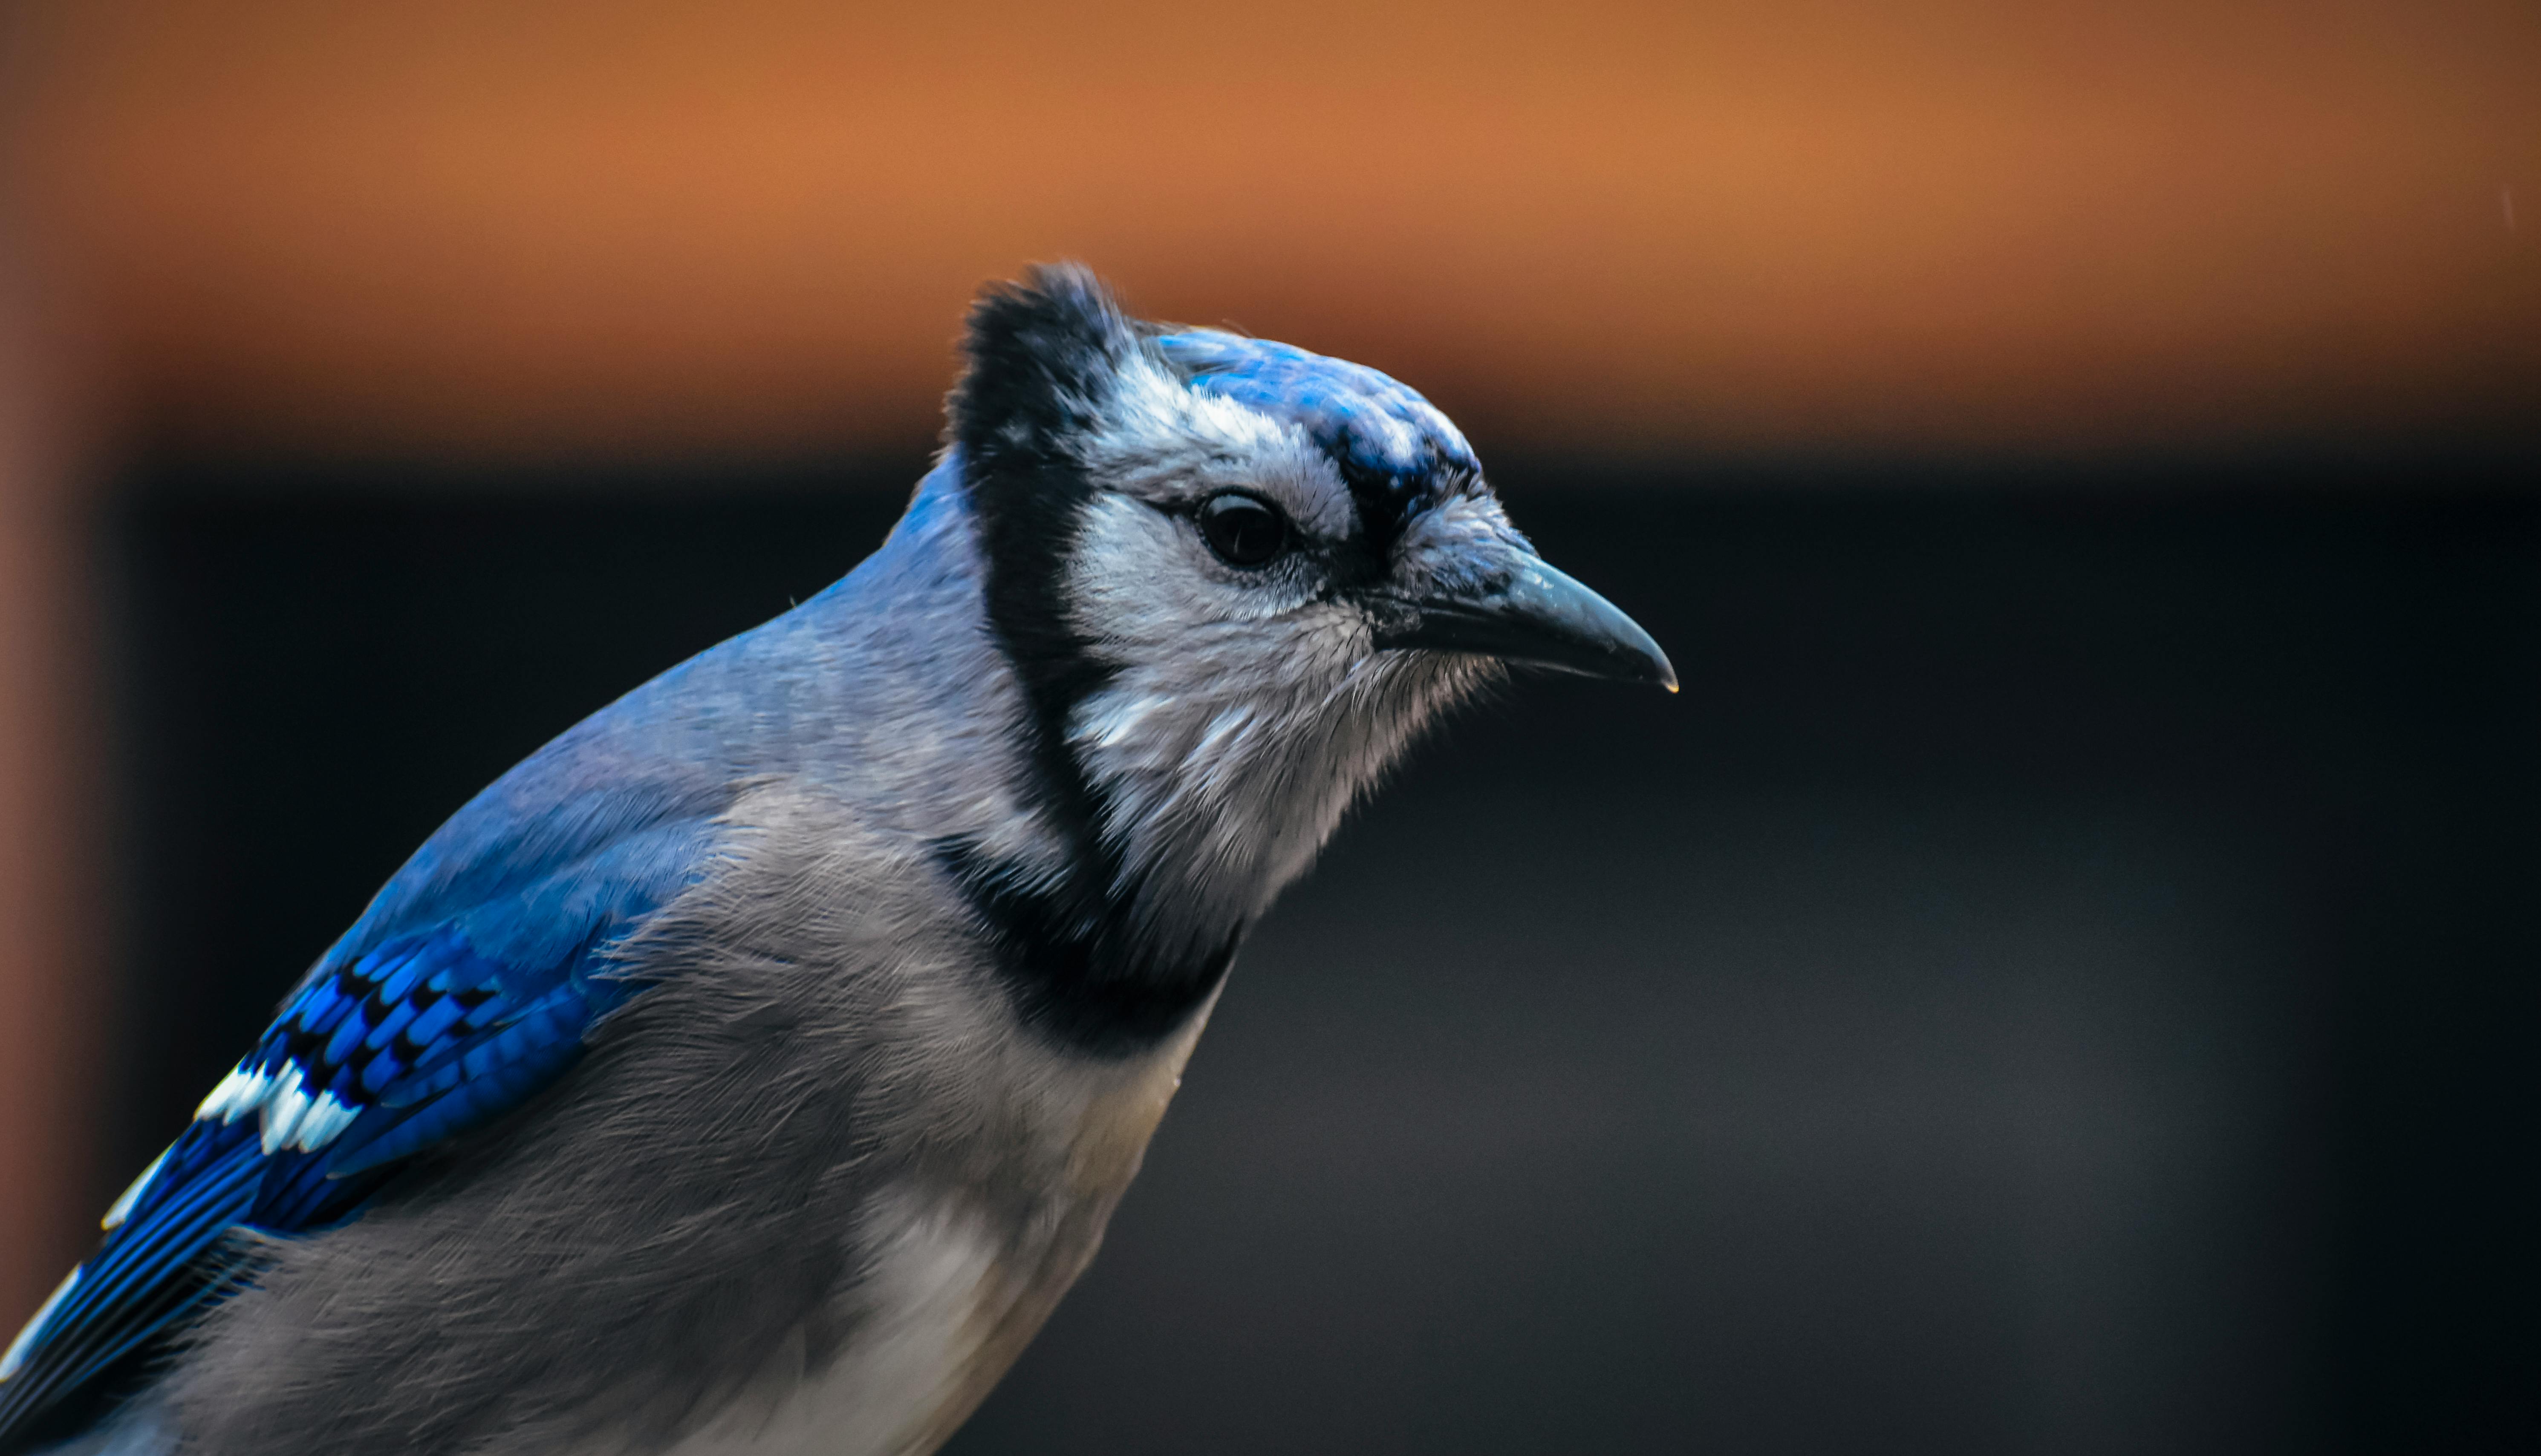 Blue Jay Bird Photos, Download The BEST Free Blue Jay Bird Stock Photos &  HD Images